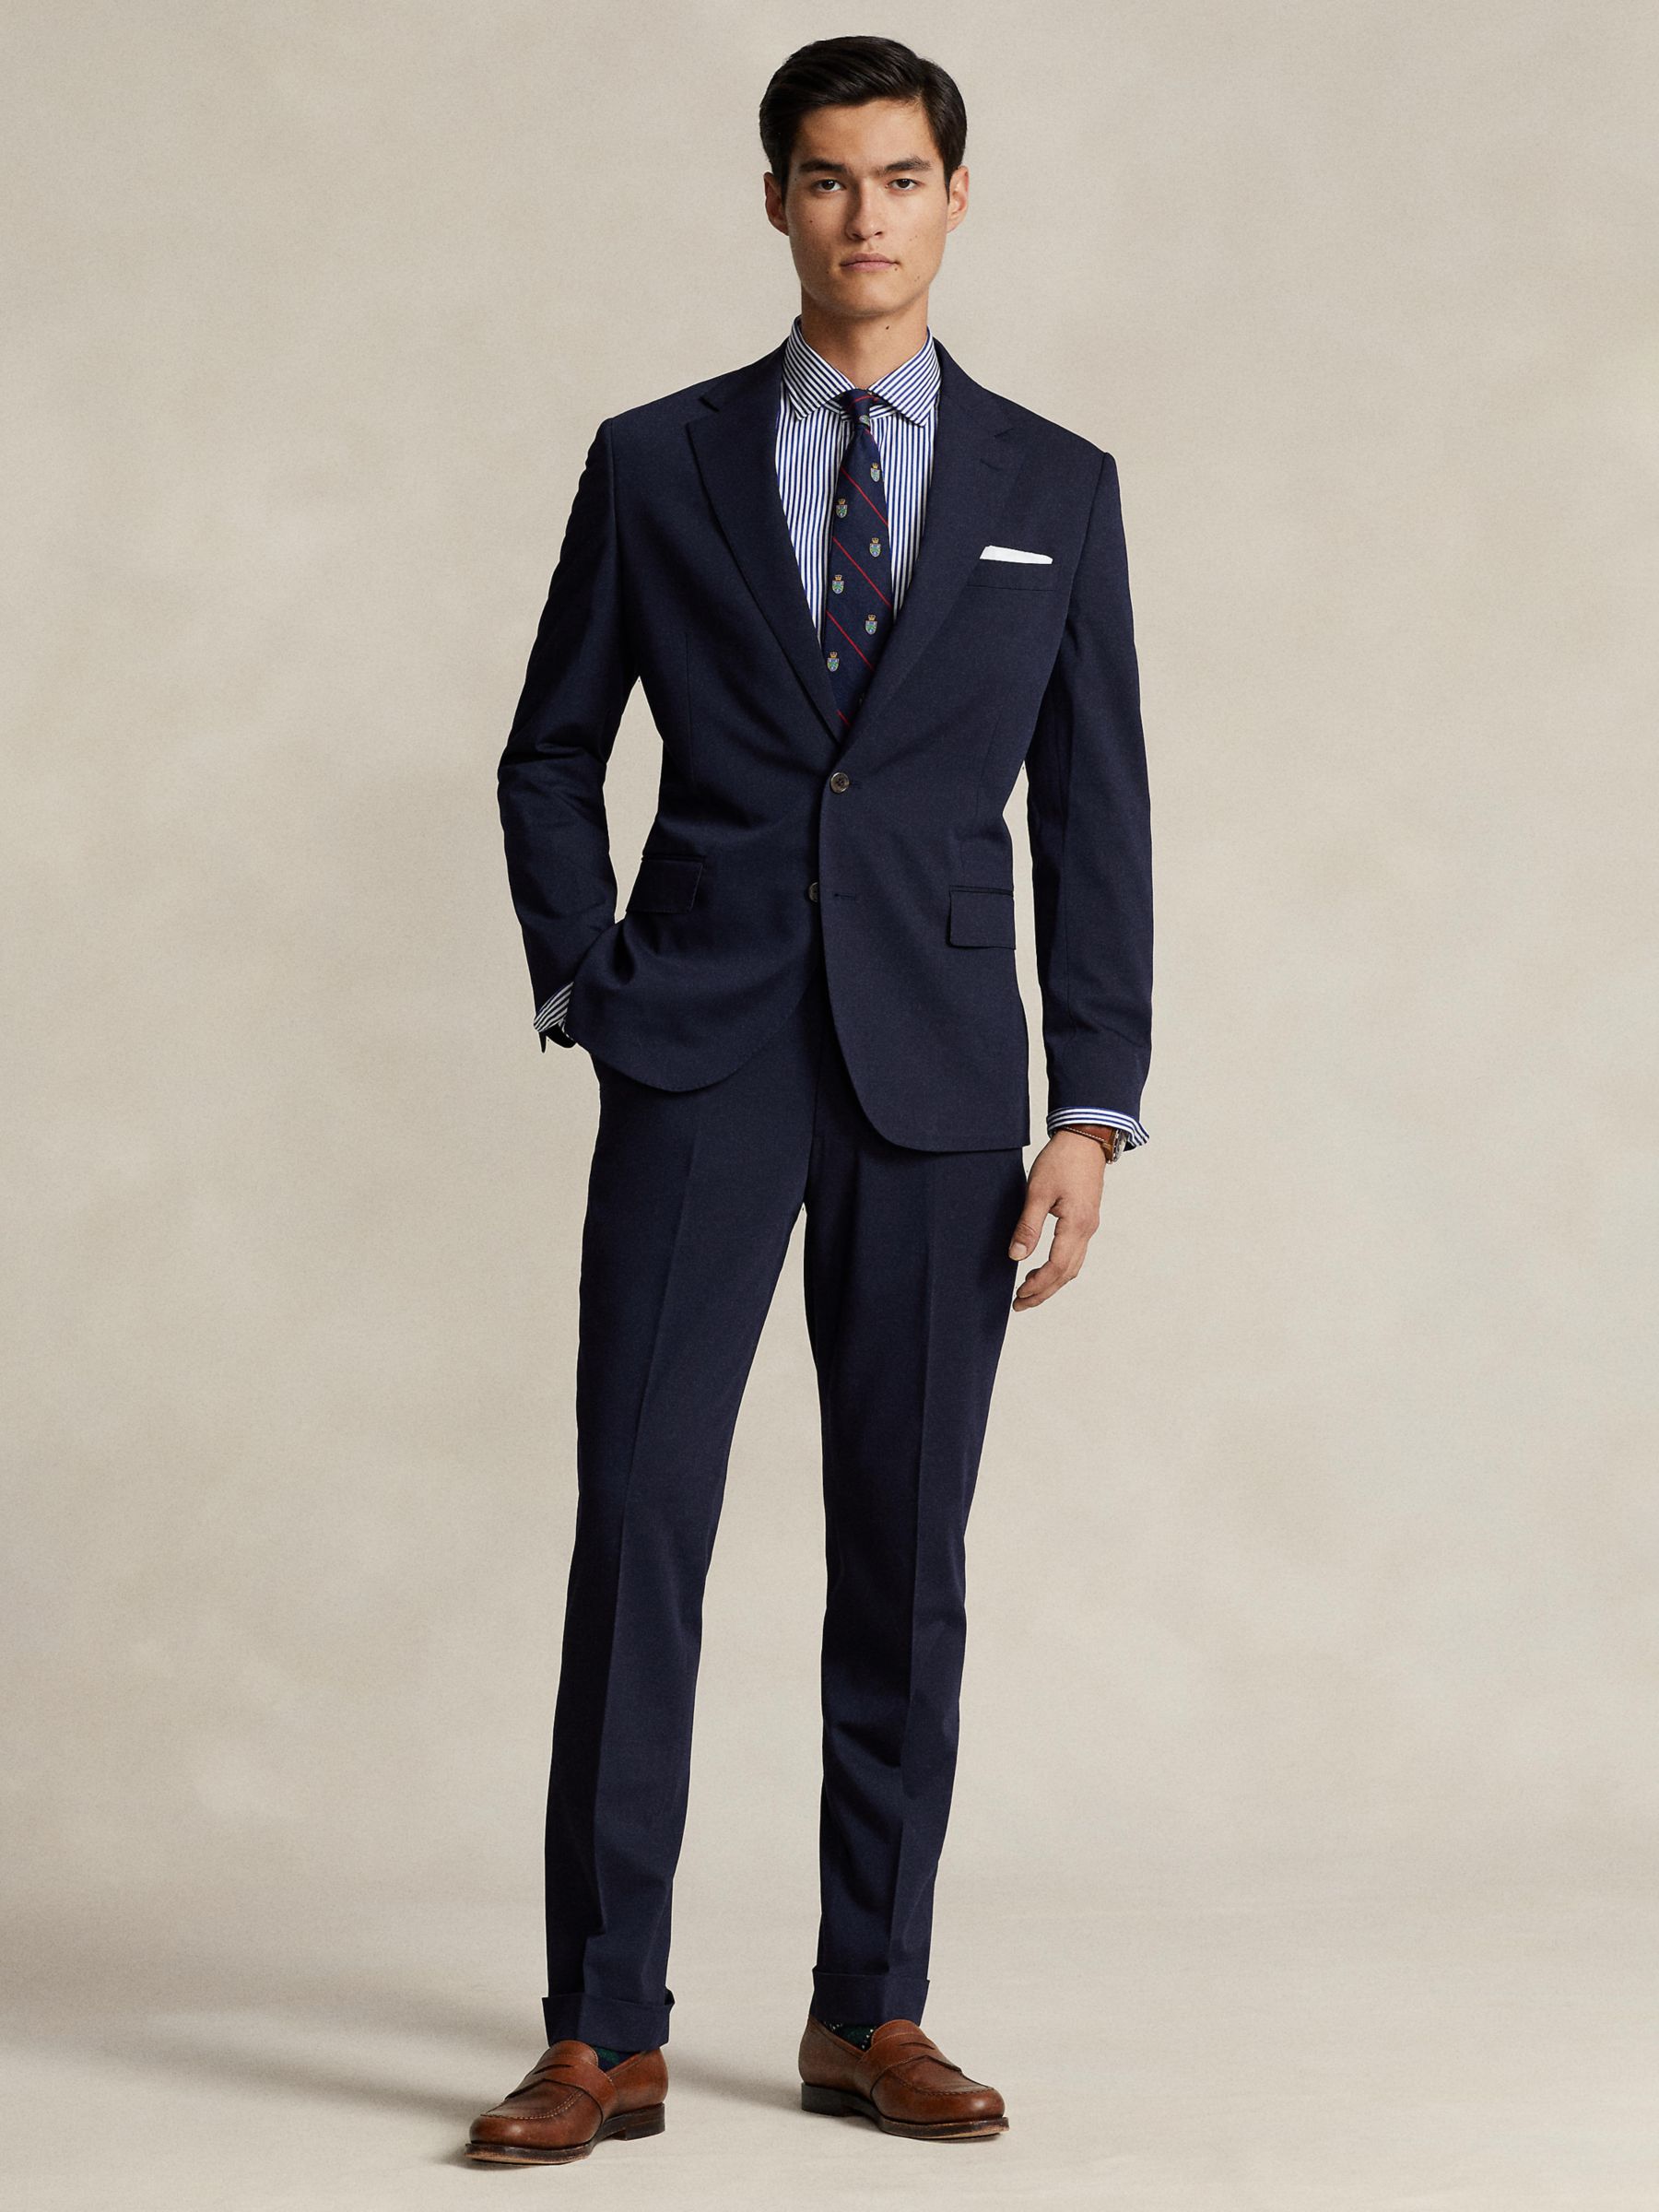 Polo Ralph Lauren Tailored Fit Suit Jacket at John Lewis & Partners